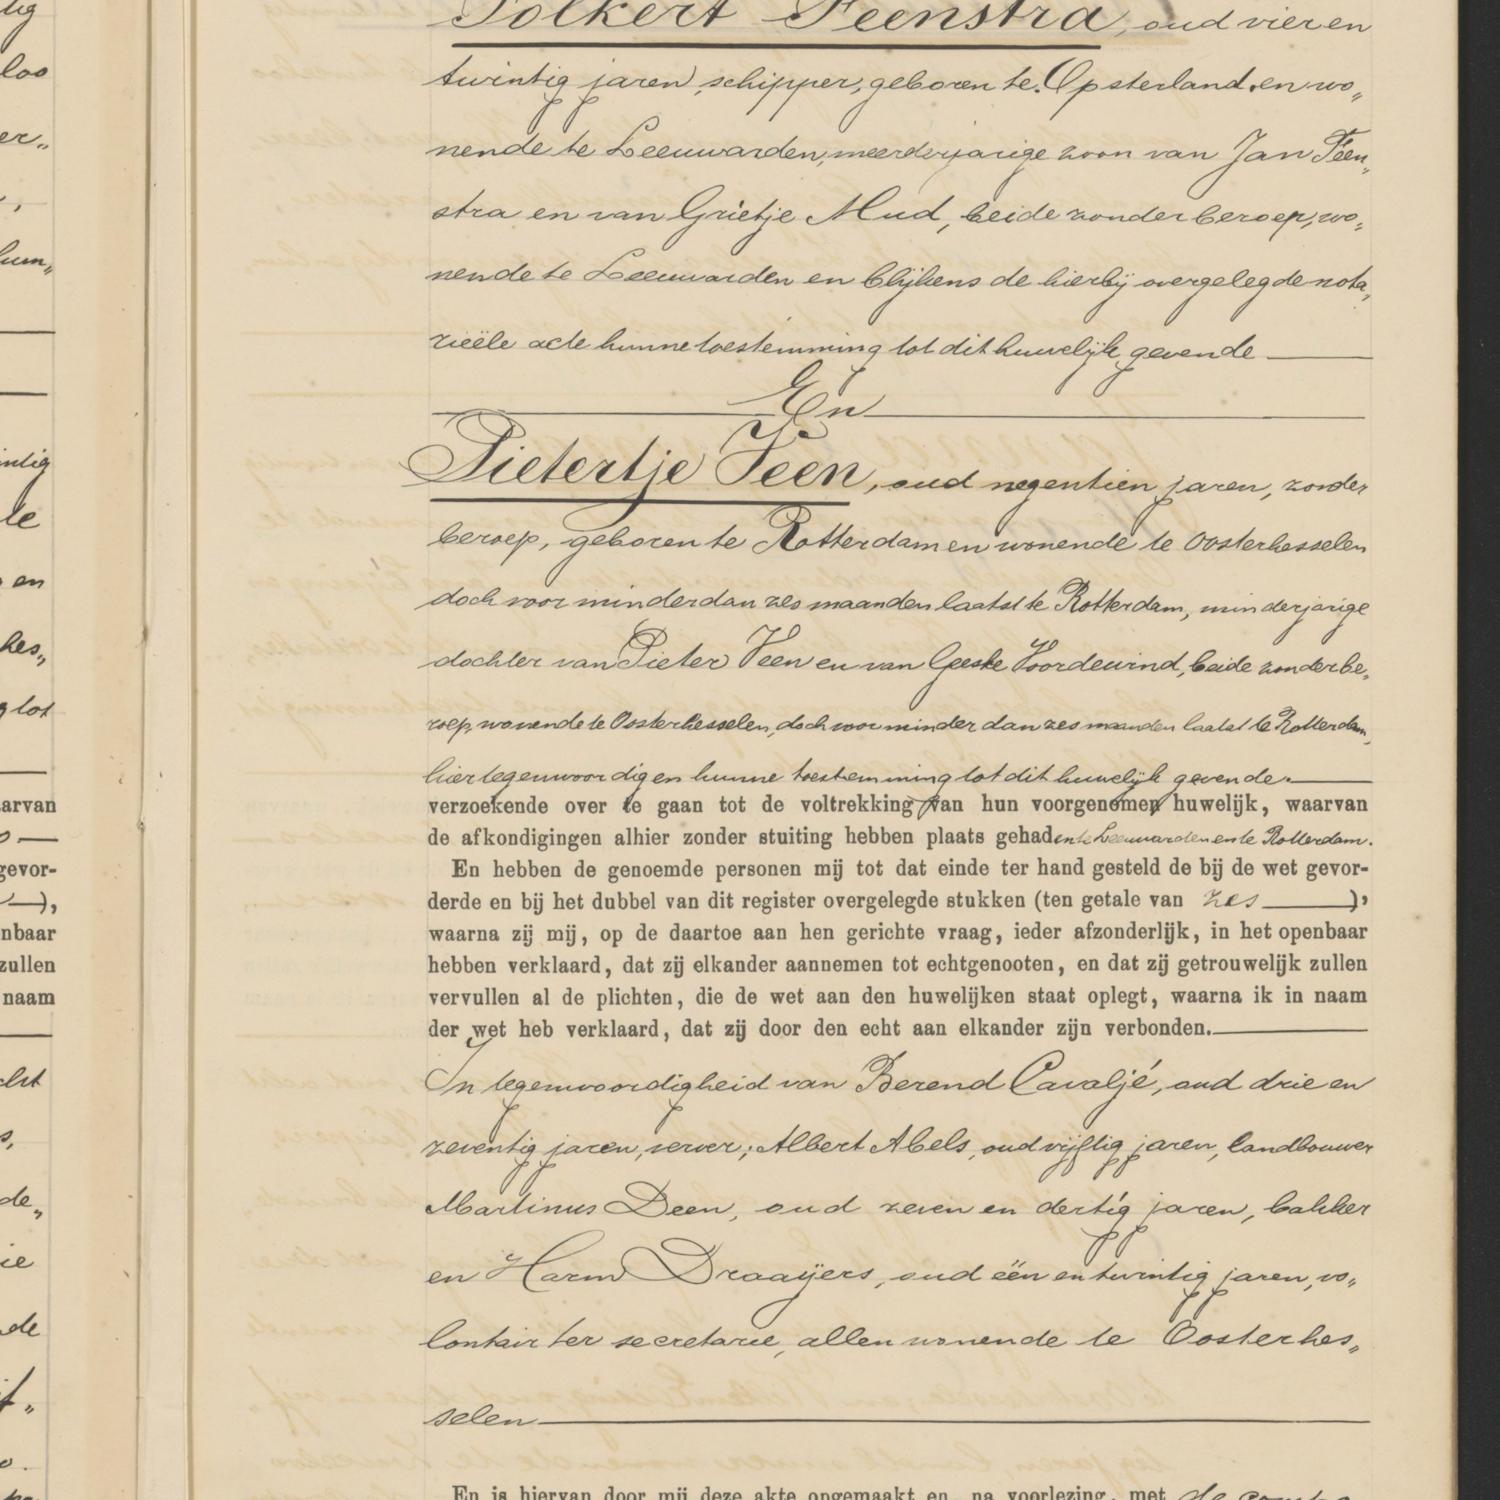 Civil registry of marriages, Oosterhesselen, 1906, record 12